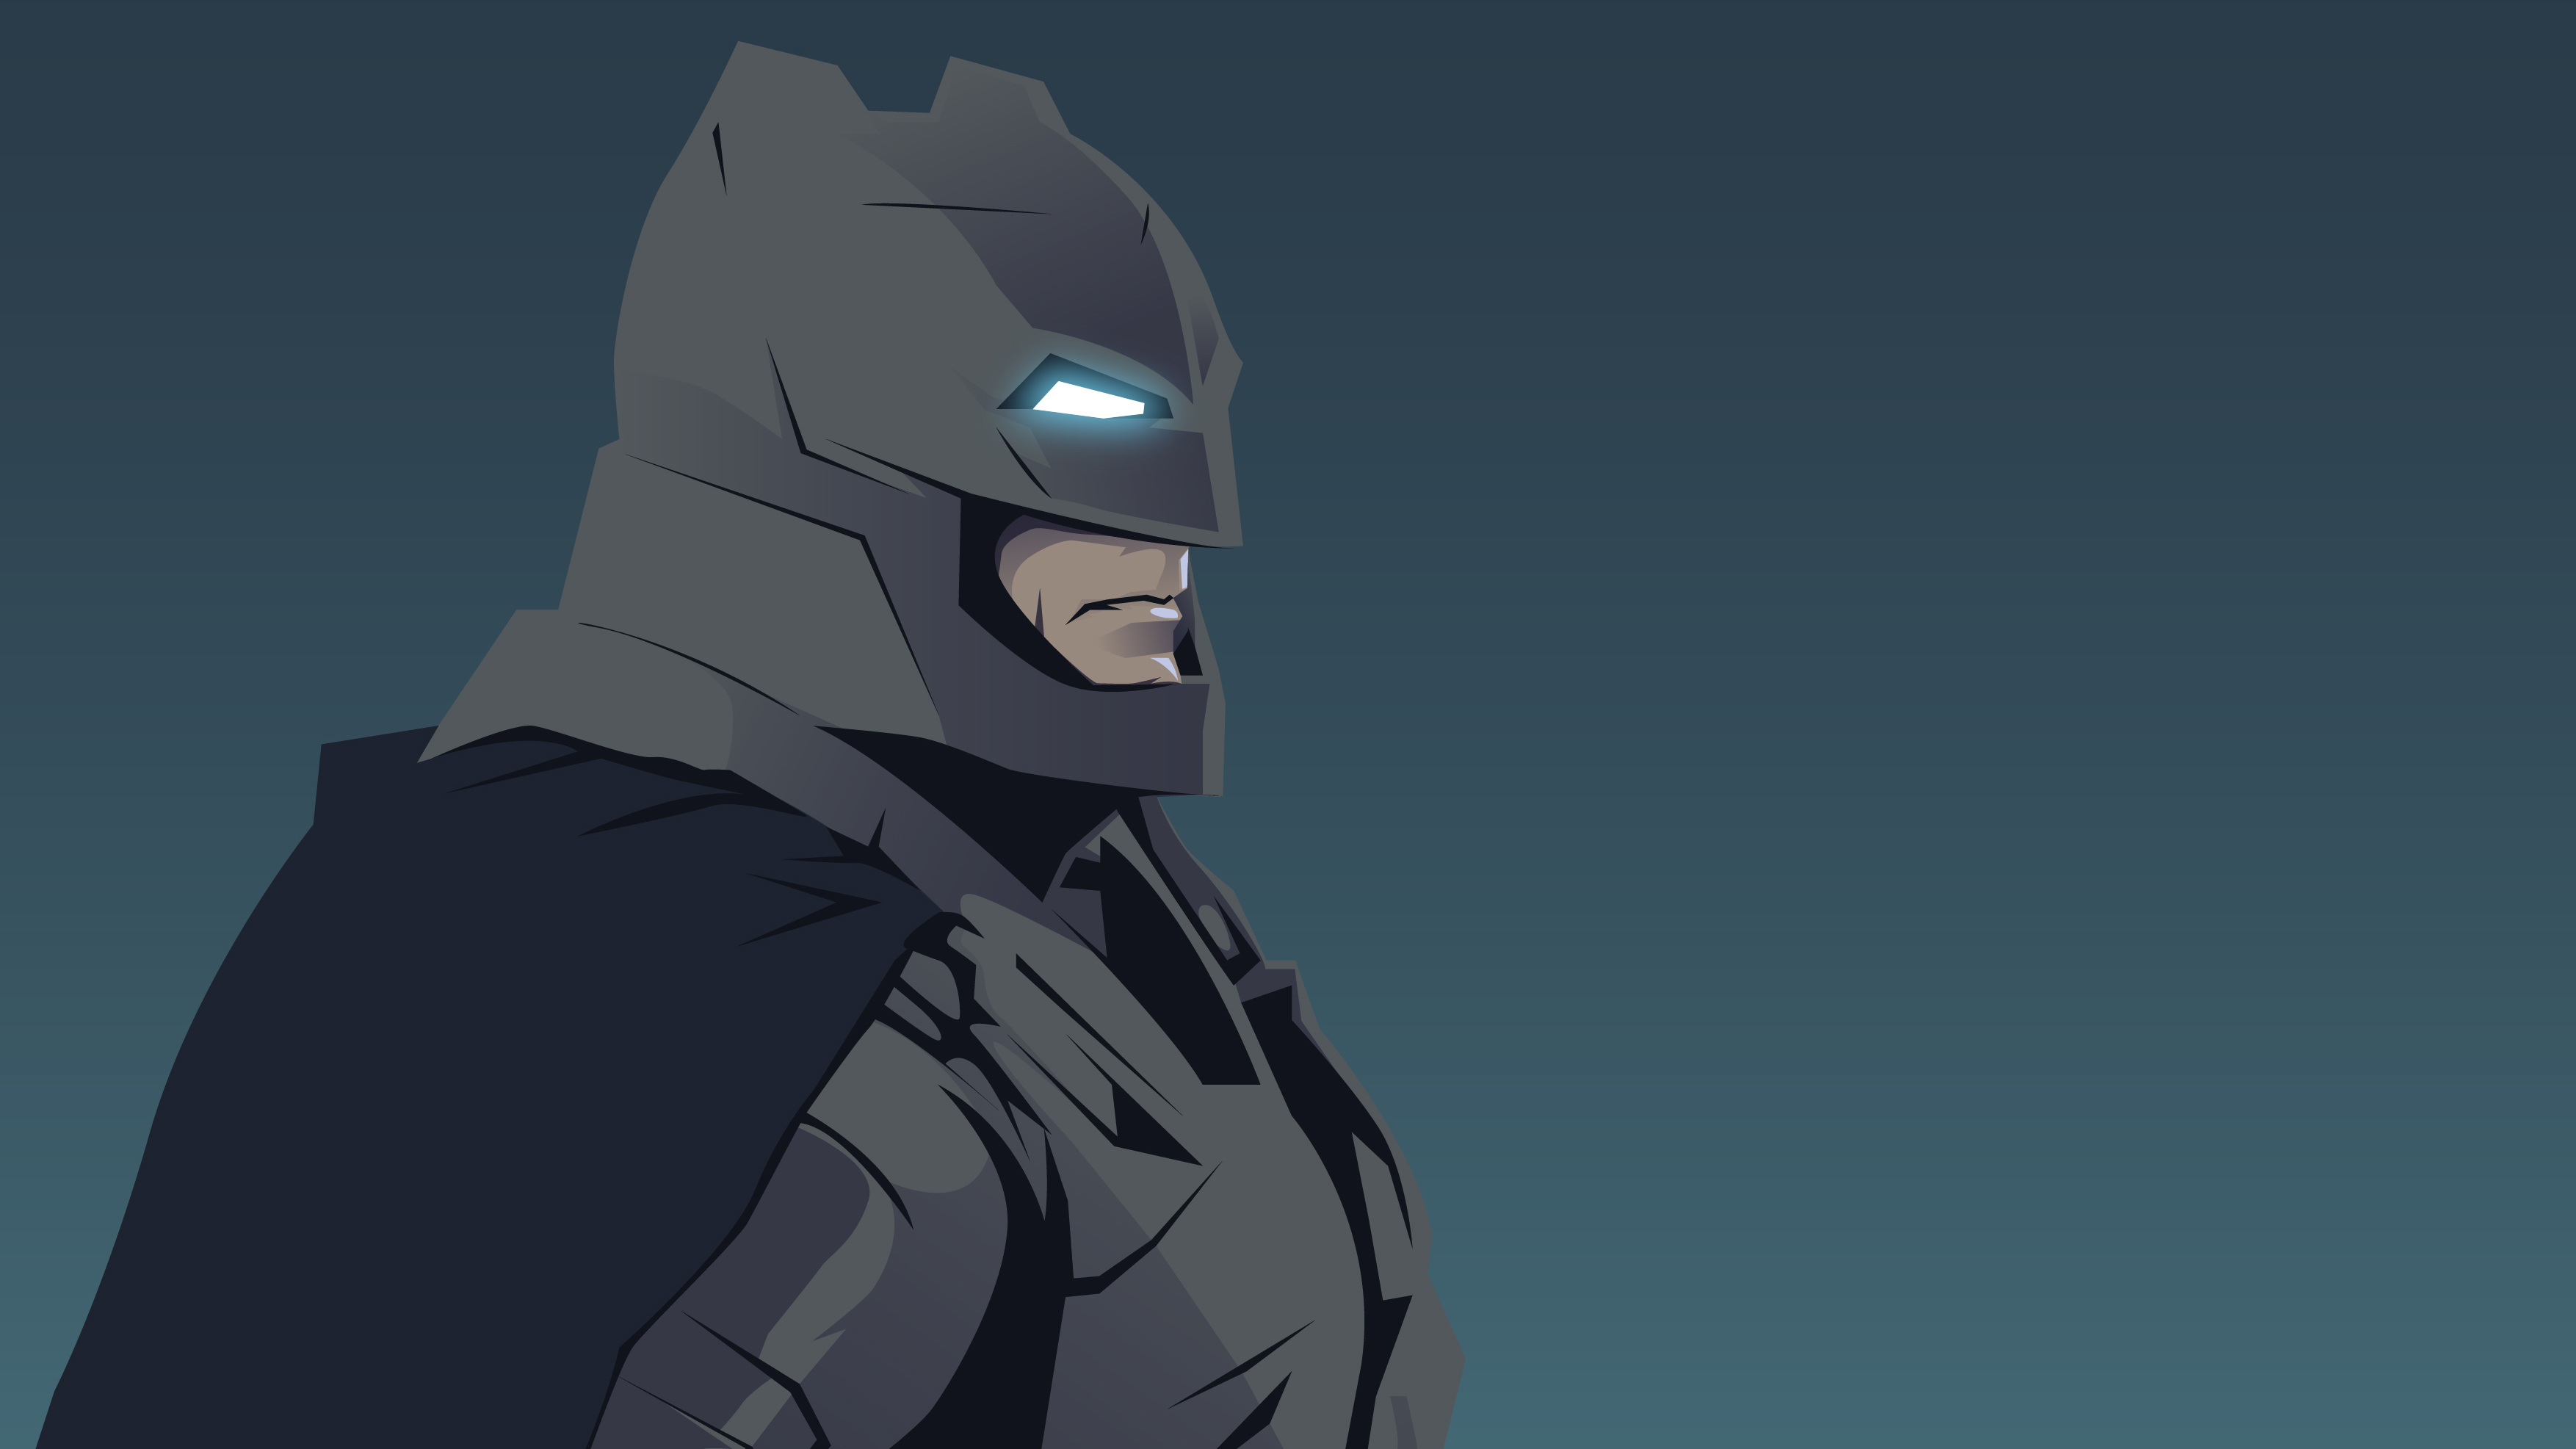 Batman Armour Wallpapers